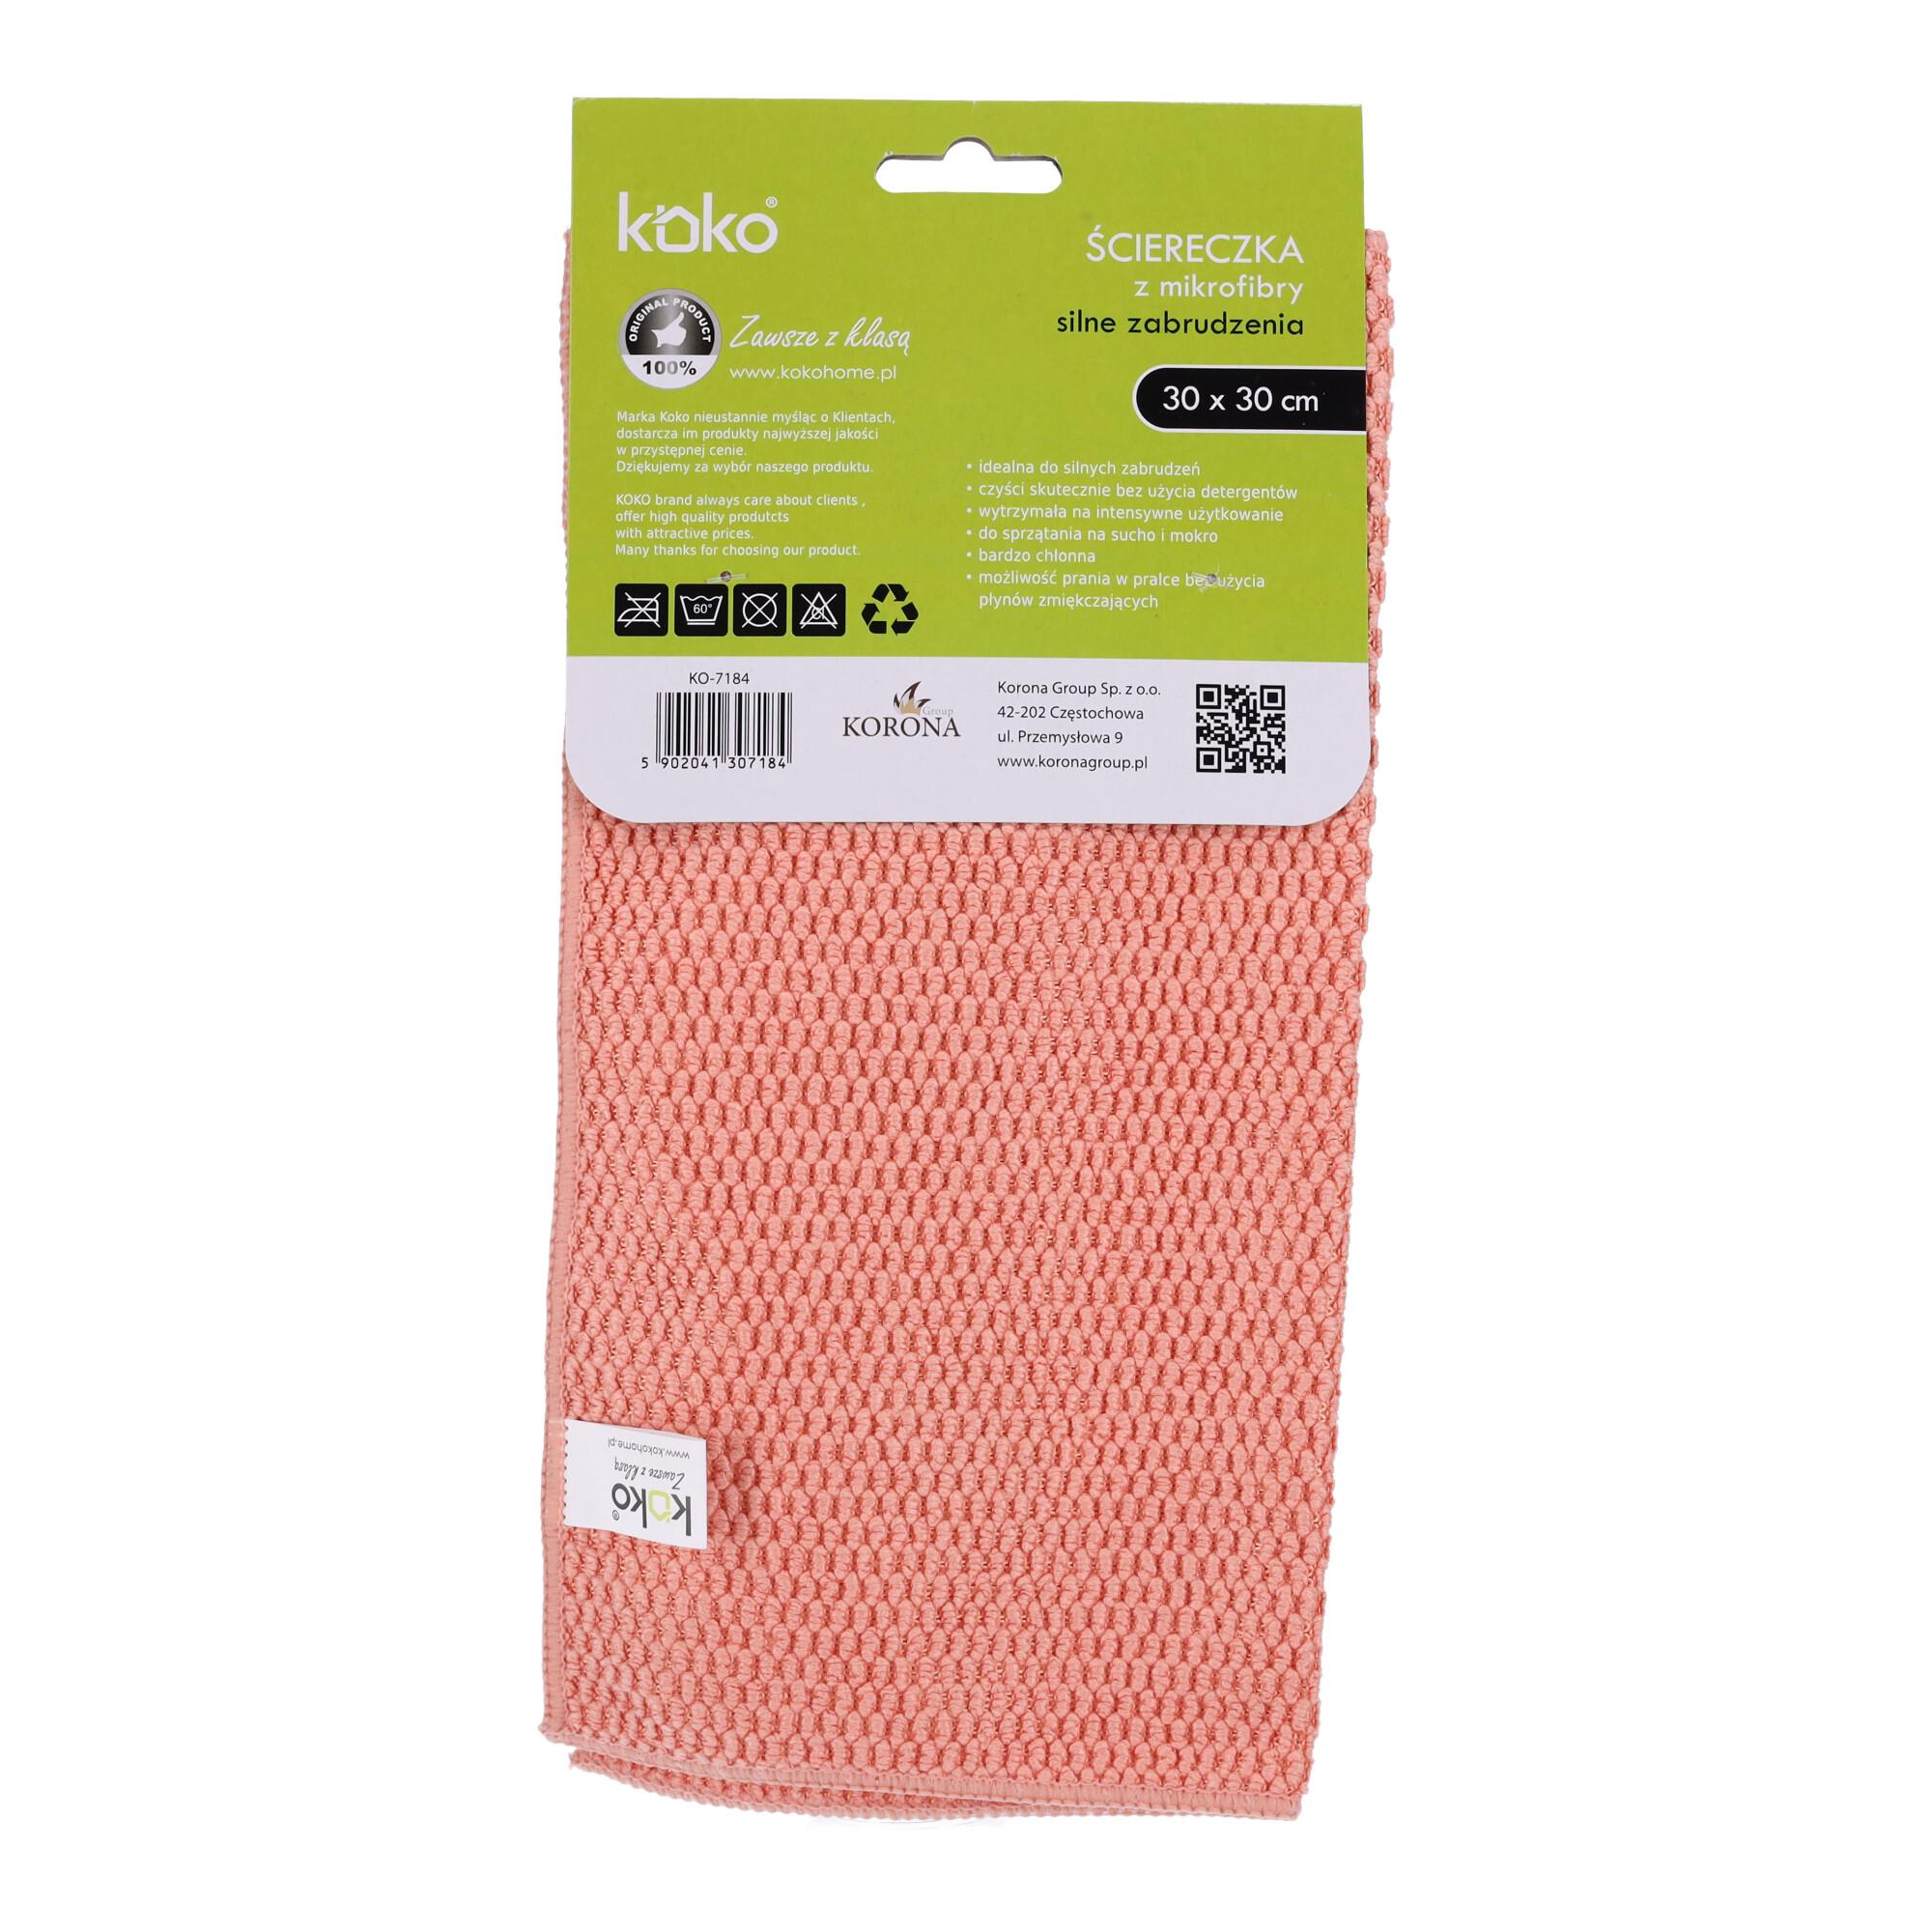 Microfiber cloth for heavy dirt KOKO, size 30x30 cm